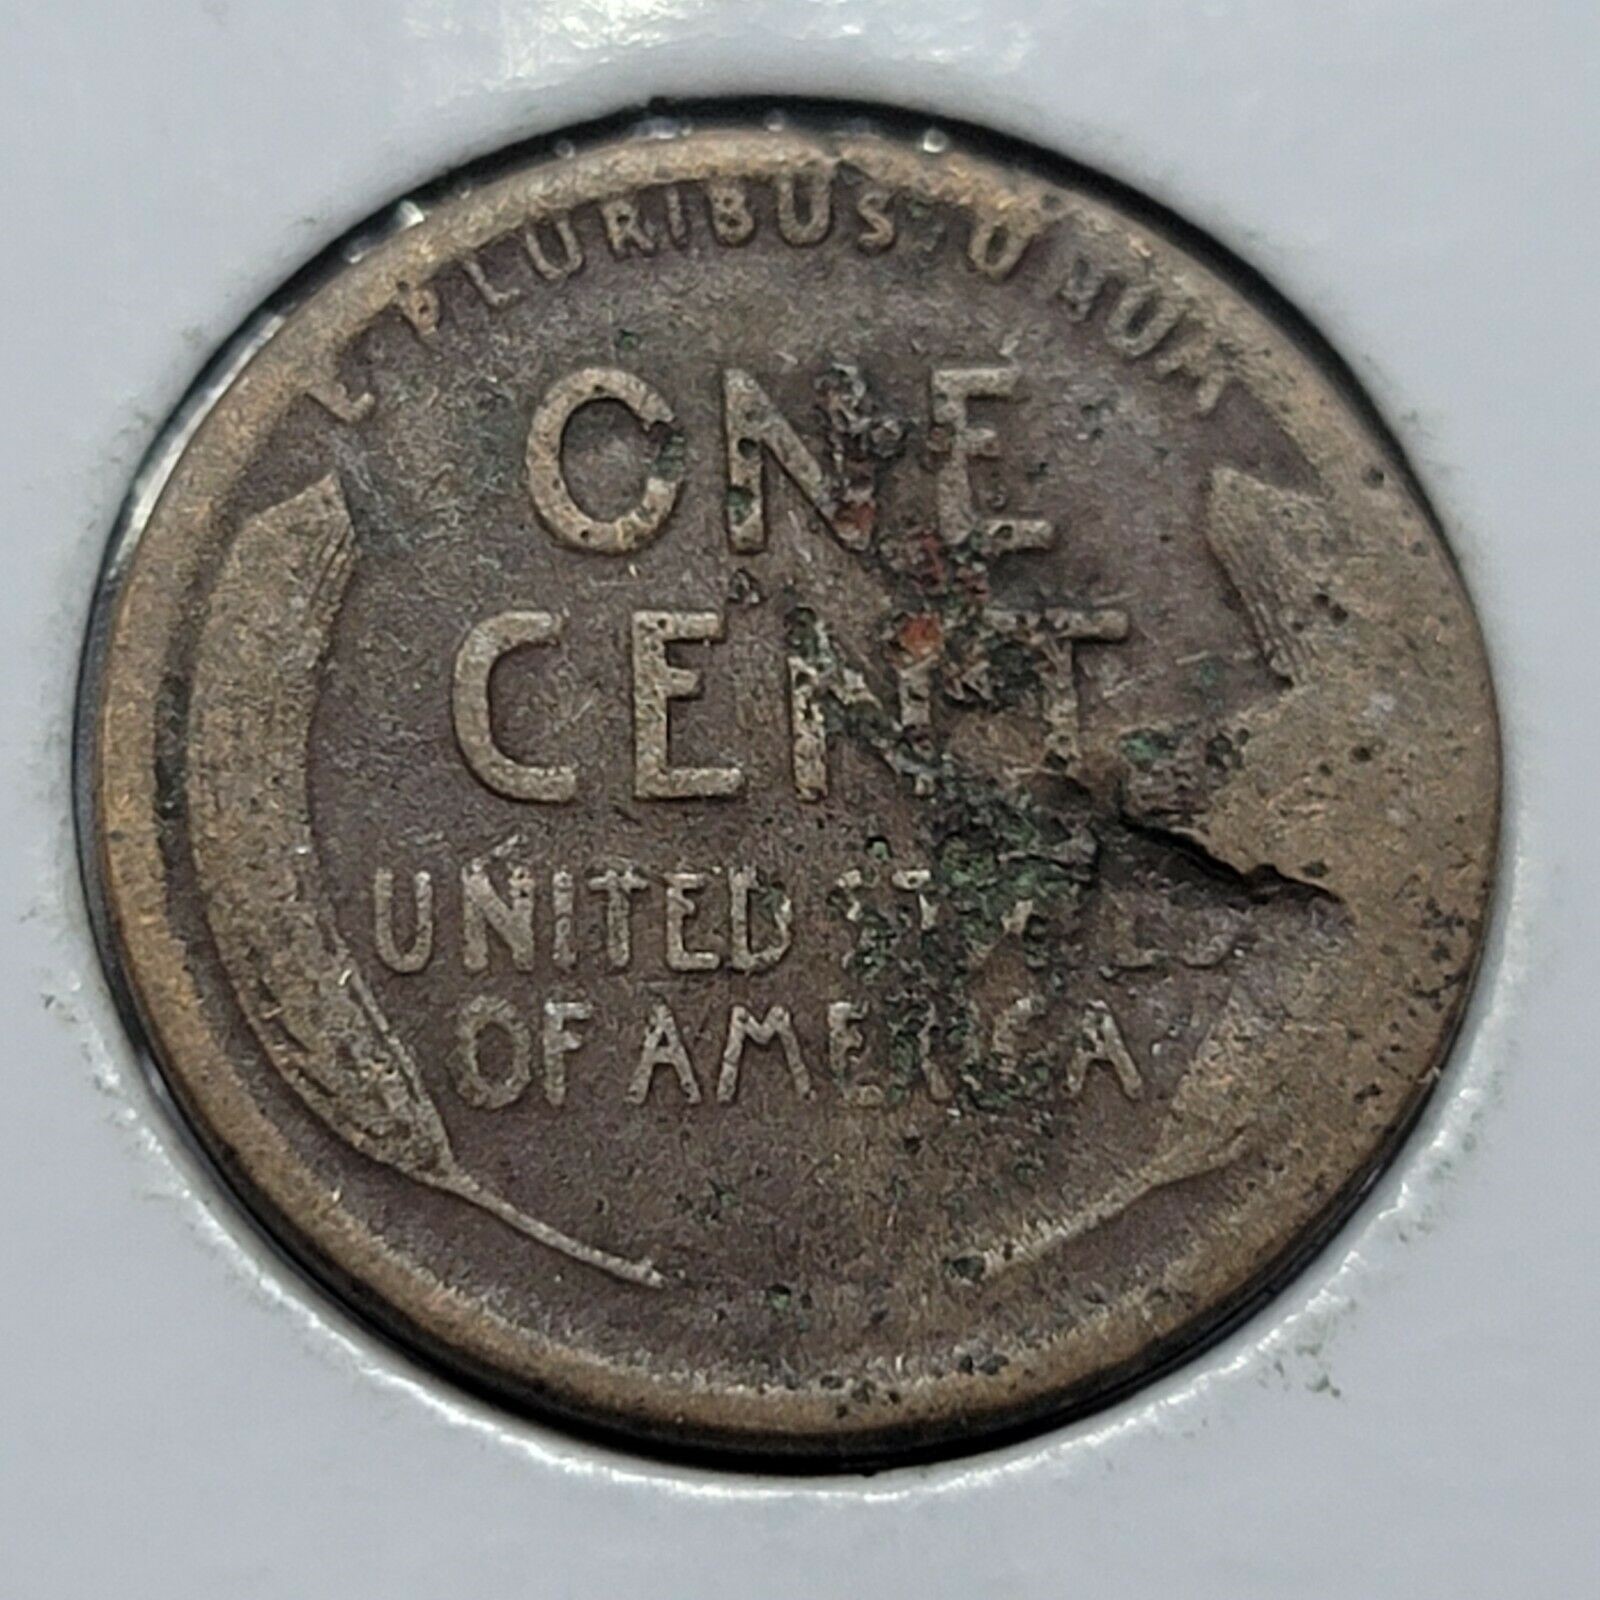 1913-S Lincoln Wheat Error  $4 + $2  224325707673  tgt92  r.jpg